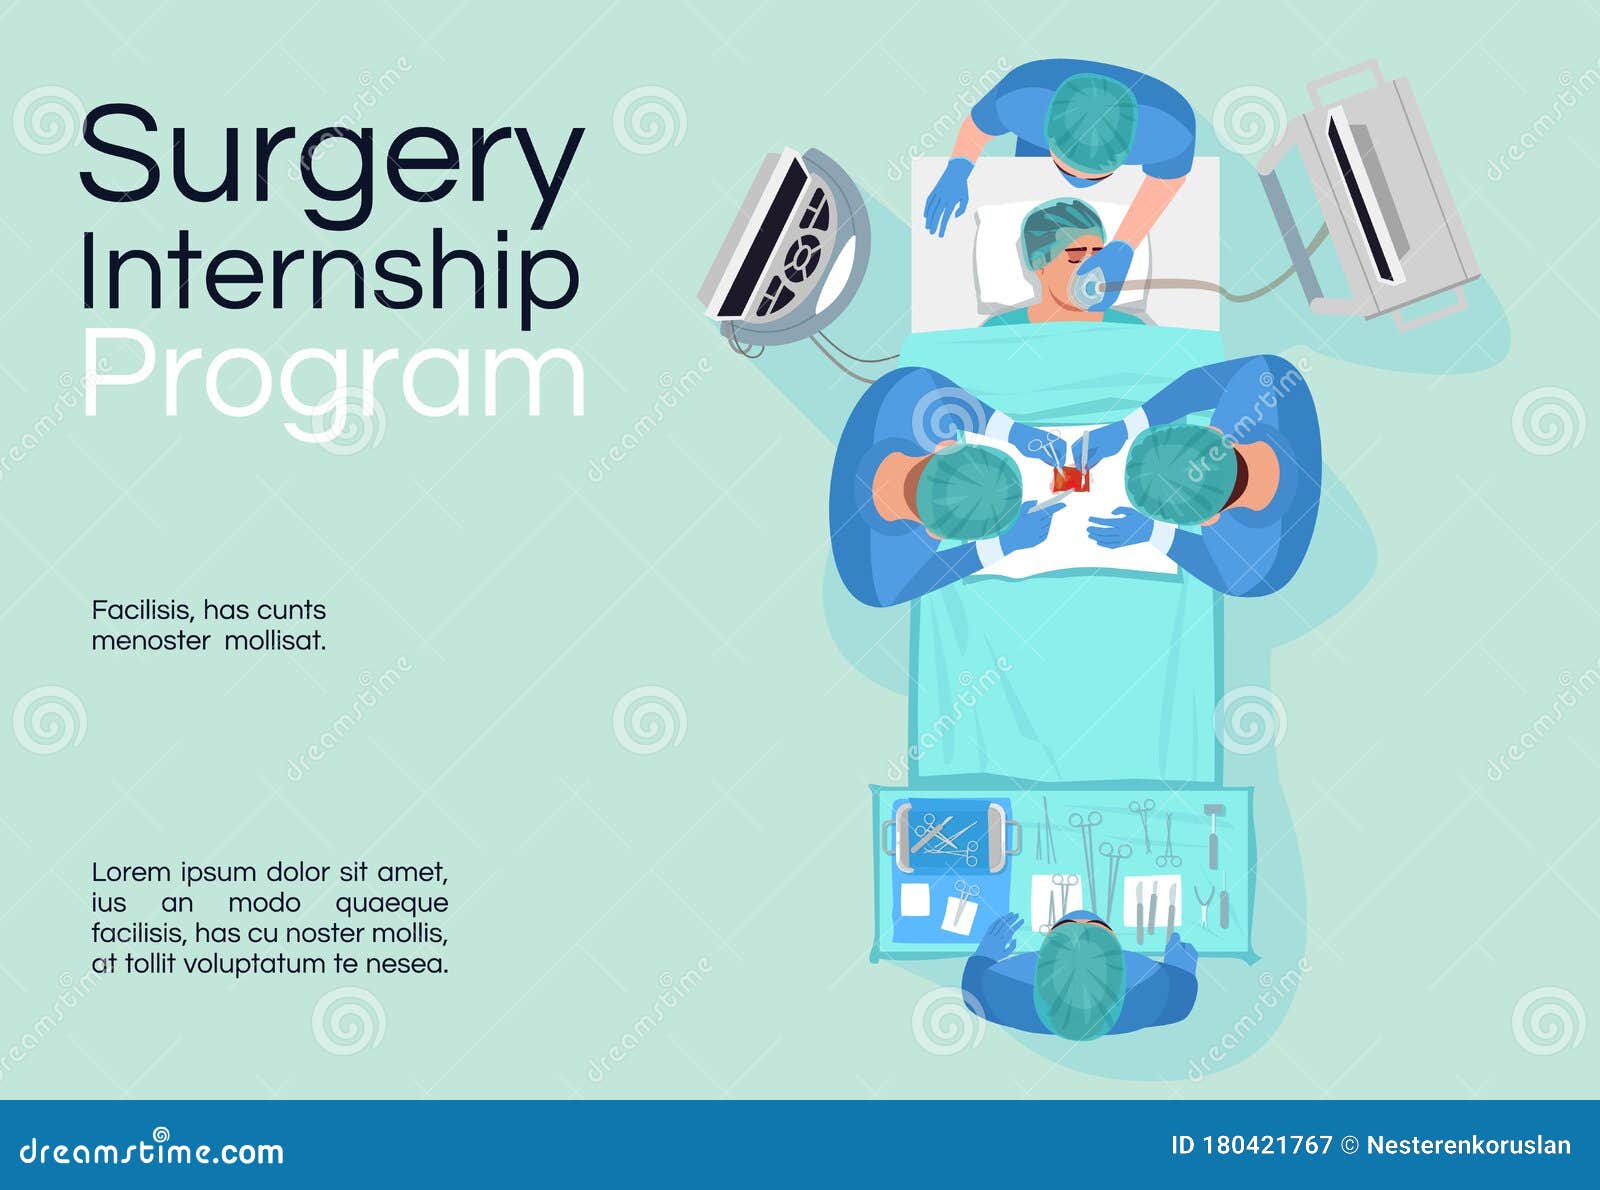 surgeon intership program banner template